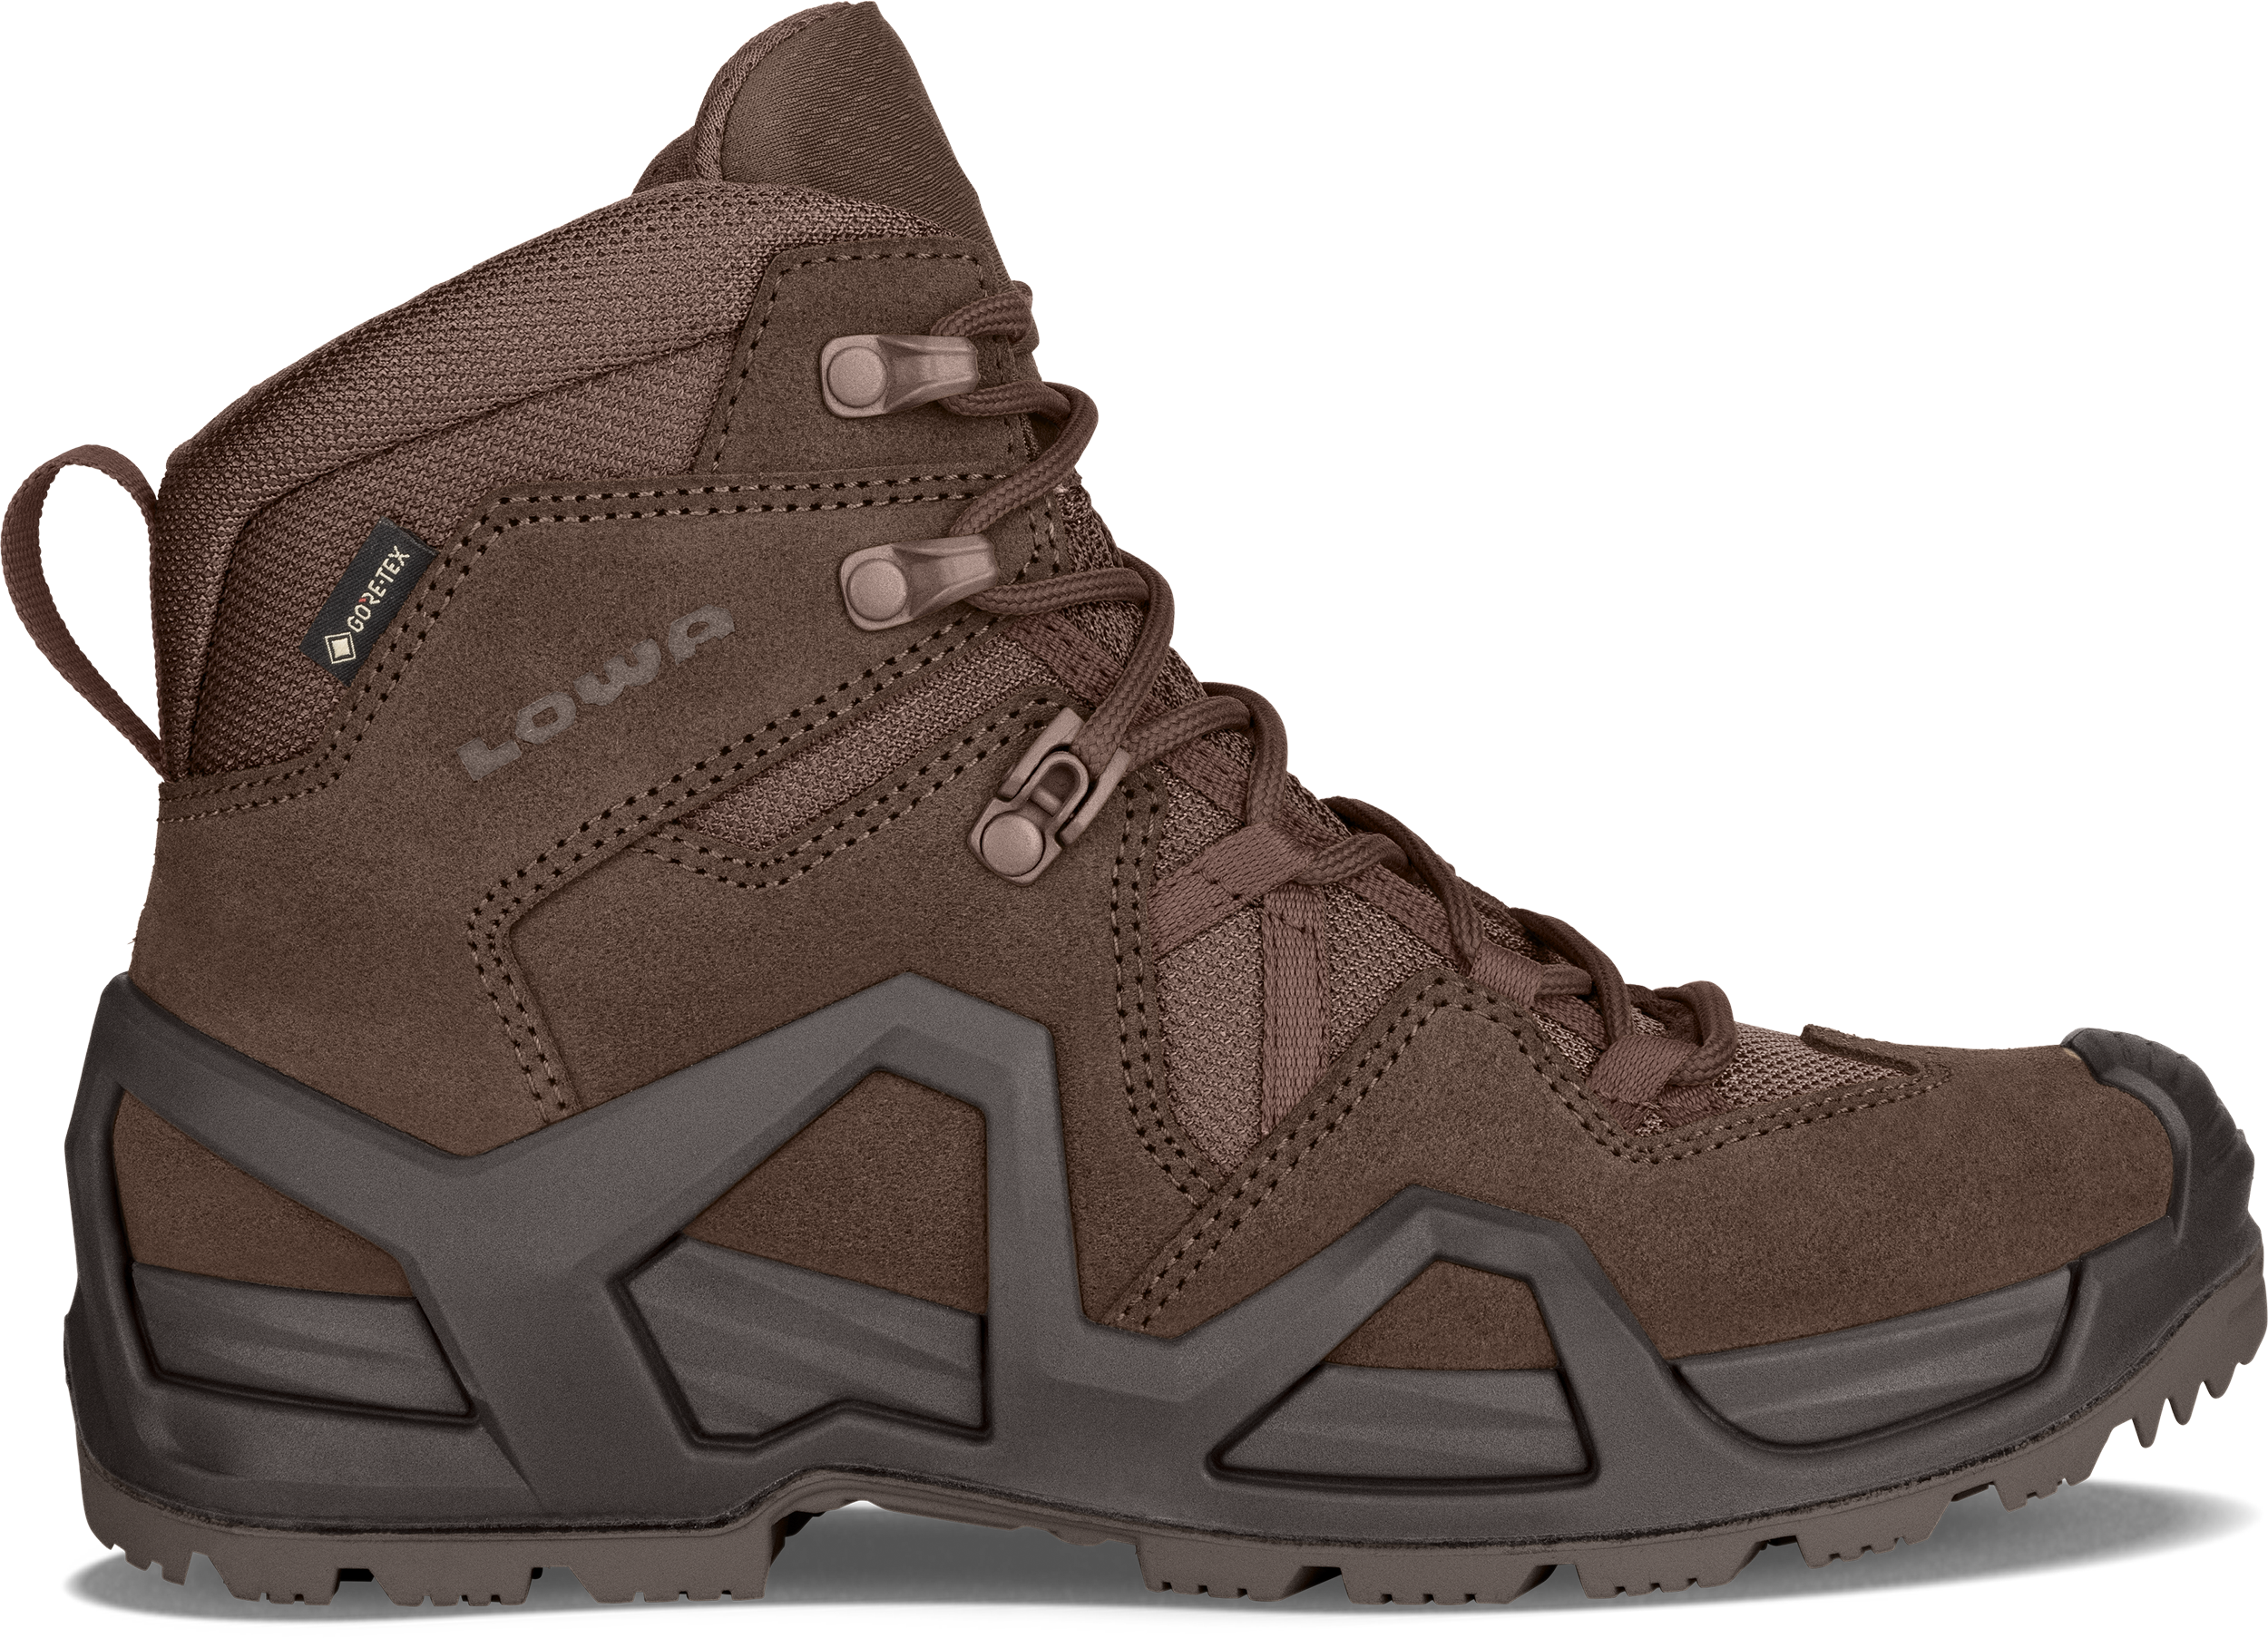 Perseus scheiden beton ZEPHYR MK2 GTX MID Ws: TASK FORCE: CLOSE-QUARTERS COMBAT Shoes for Women |  LOWA INT